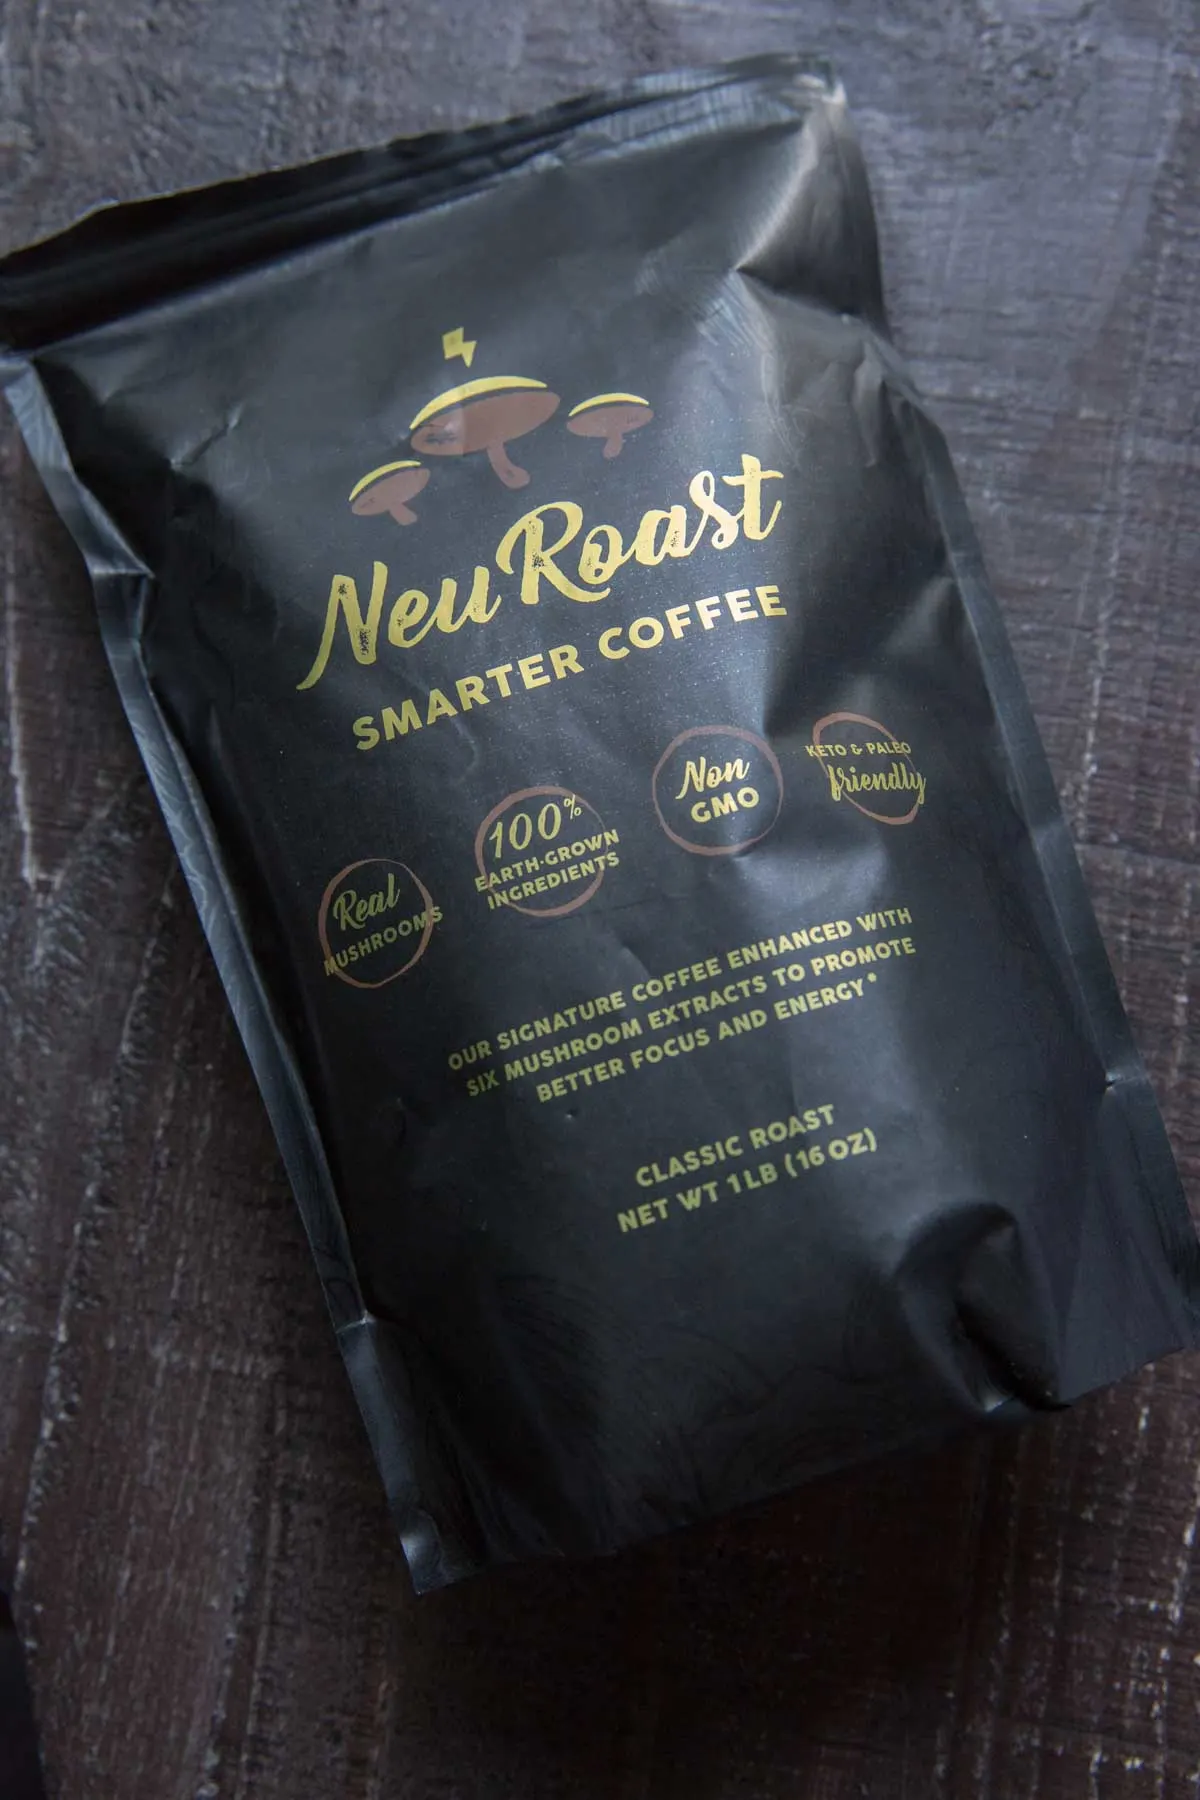 Neuroast classic blend smarter coffee bag